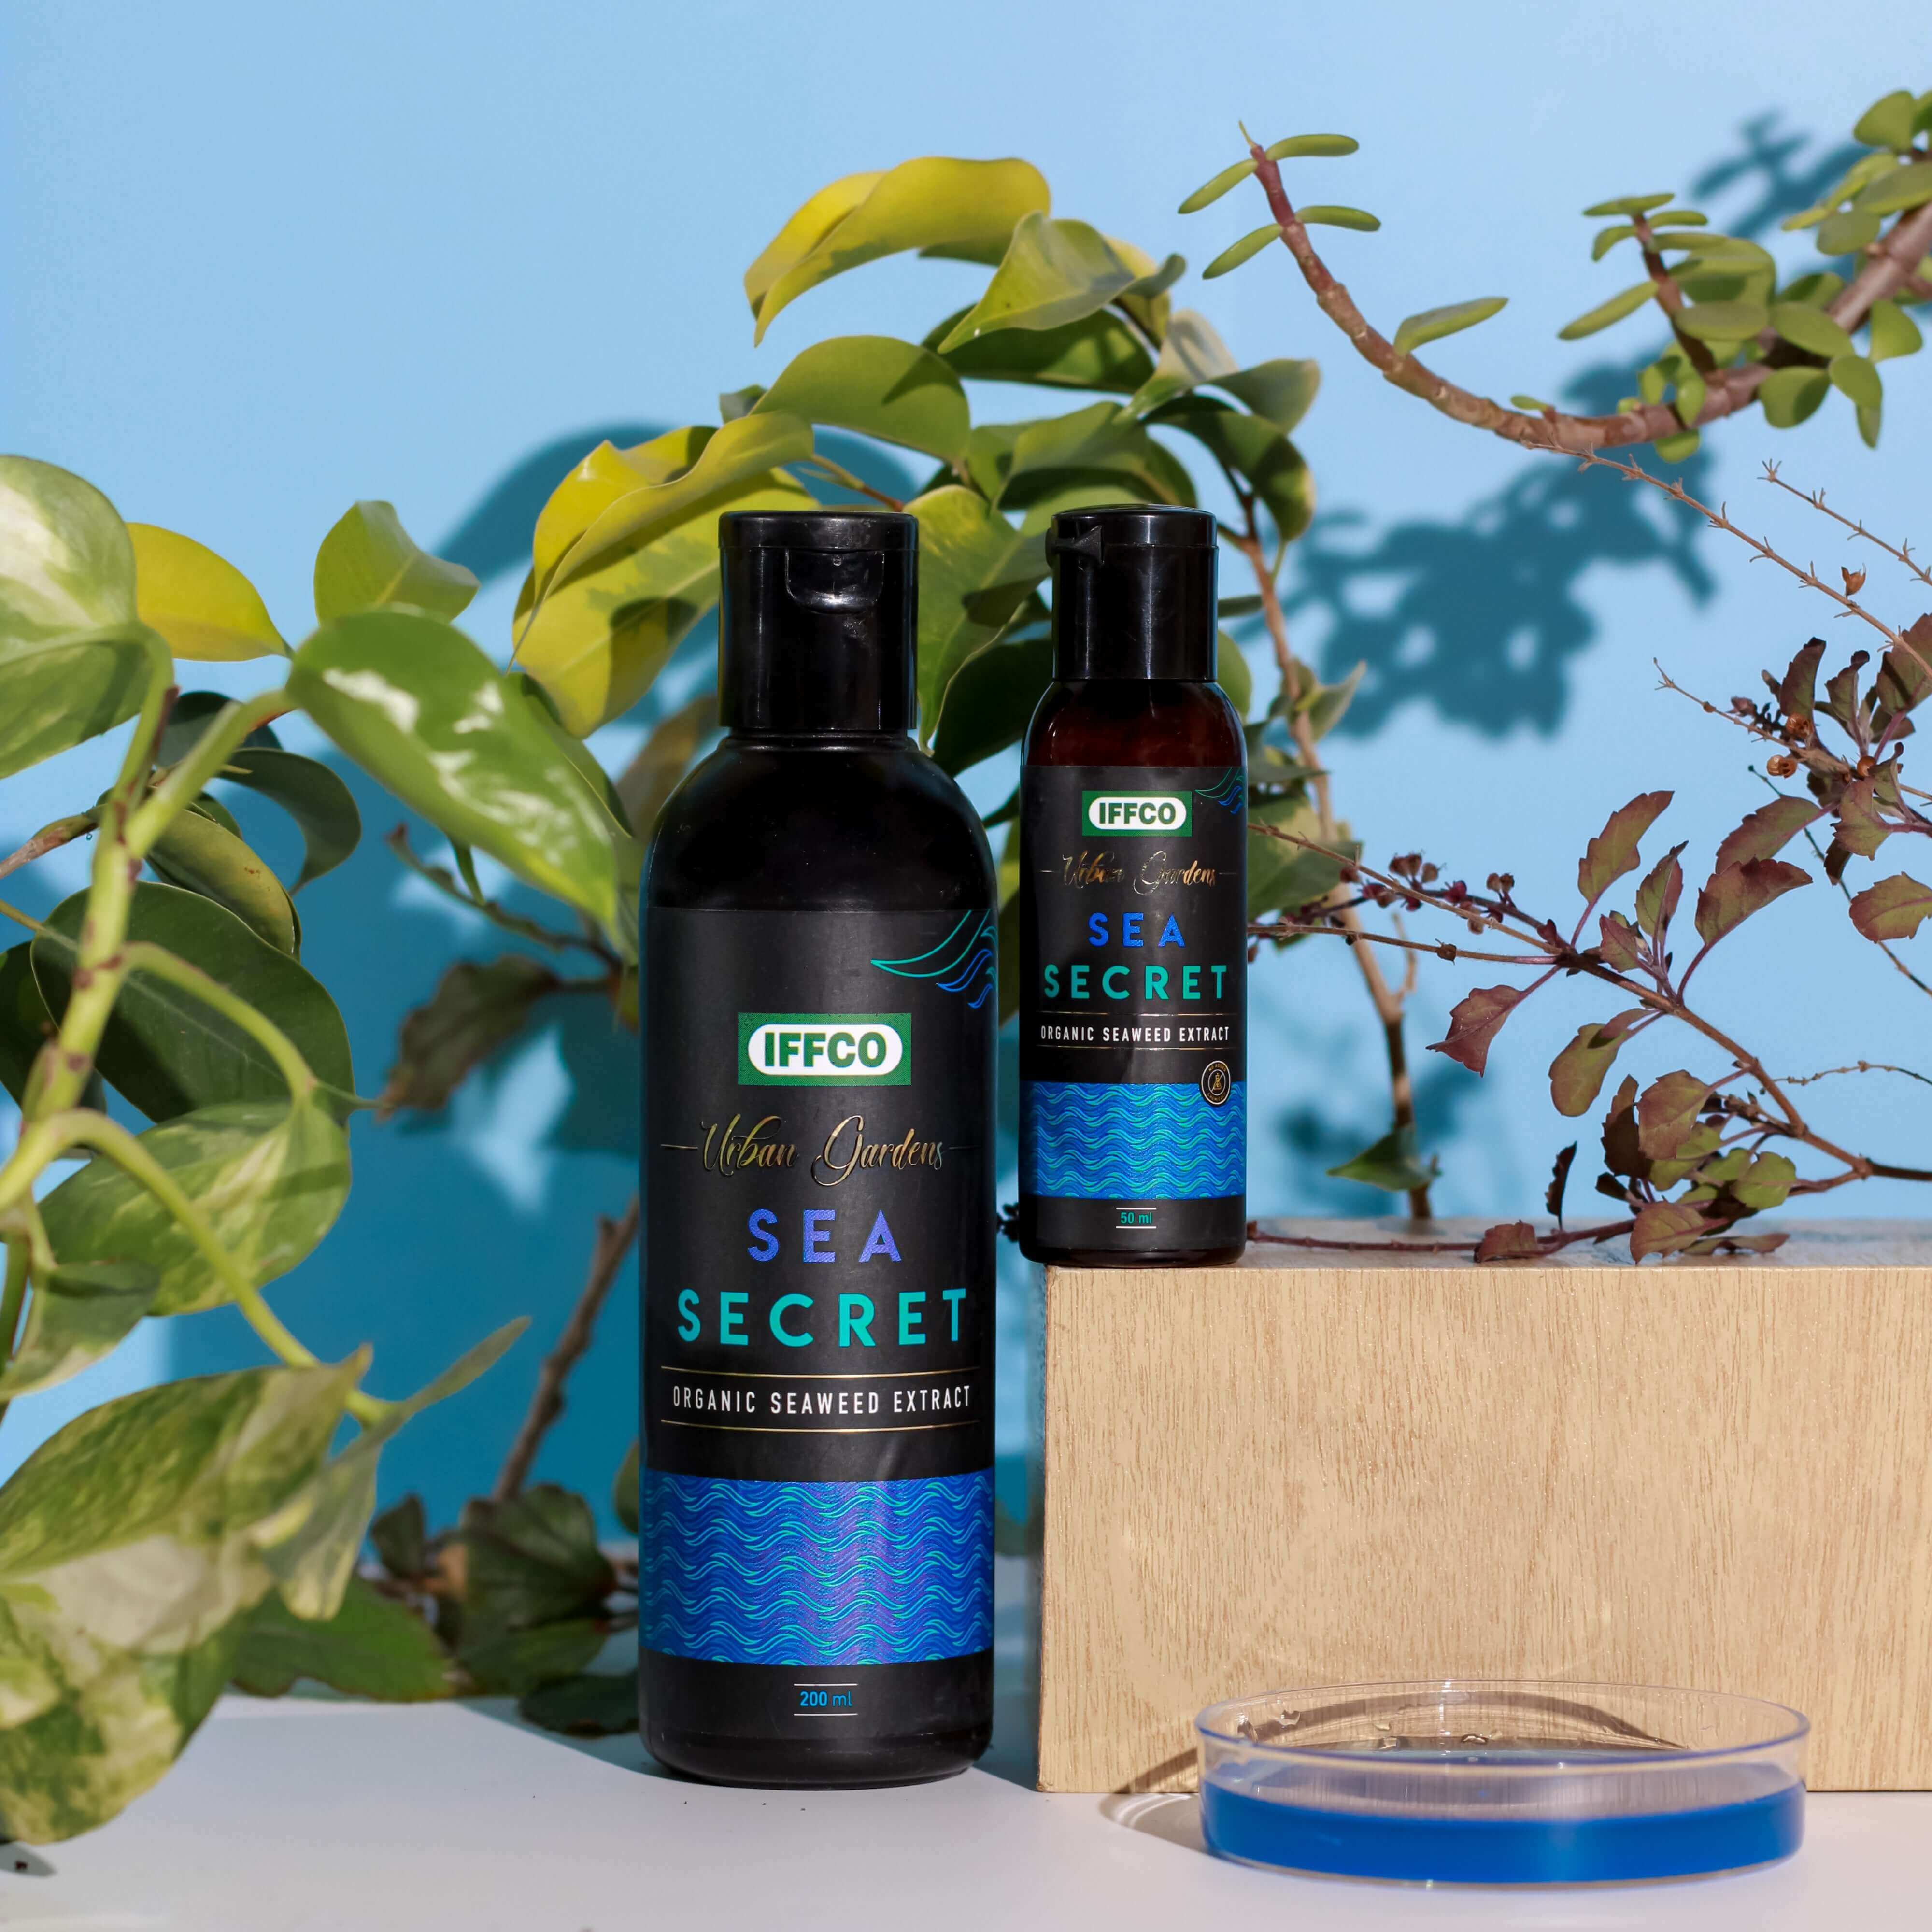 Sea Secret - Organic Seaweed Extract,Plant Growth Hormones, Water Soluble Liquid